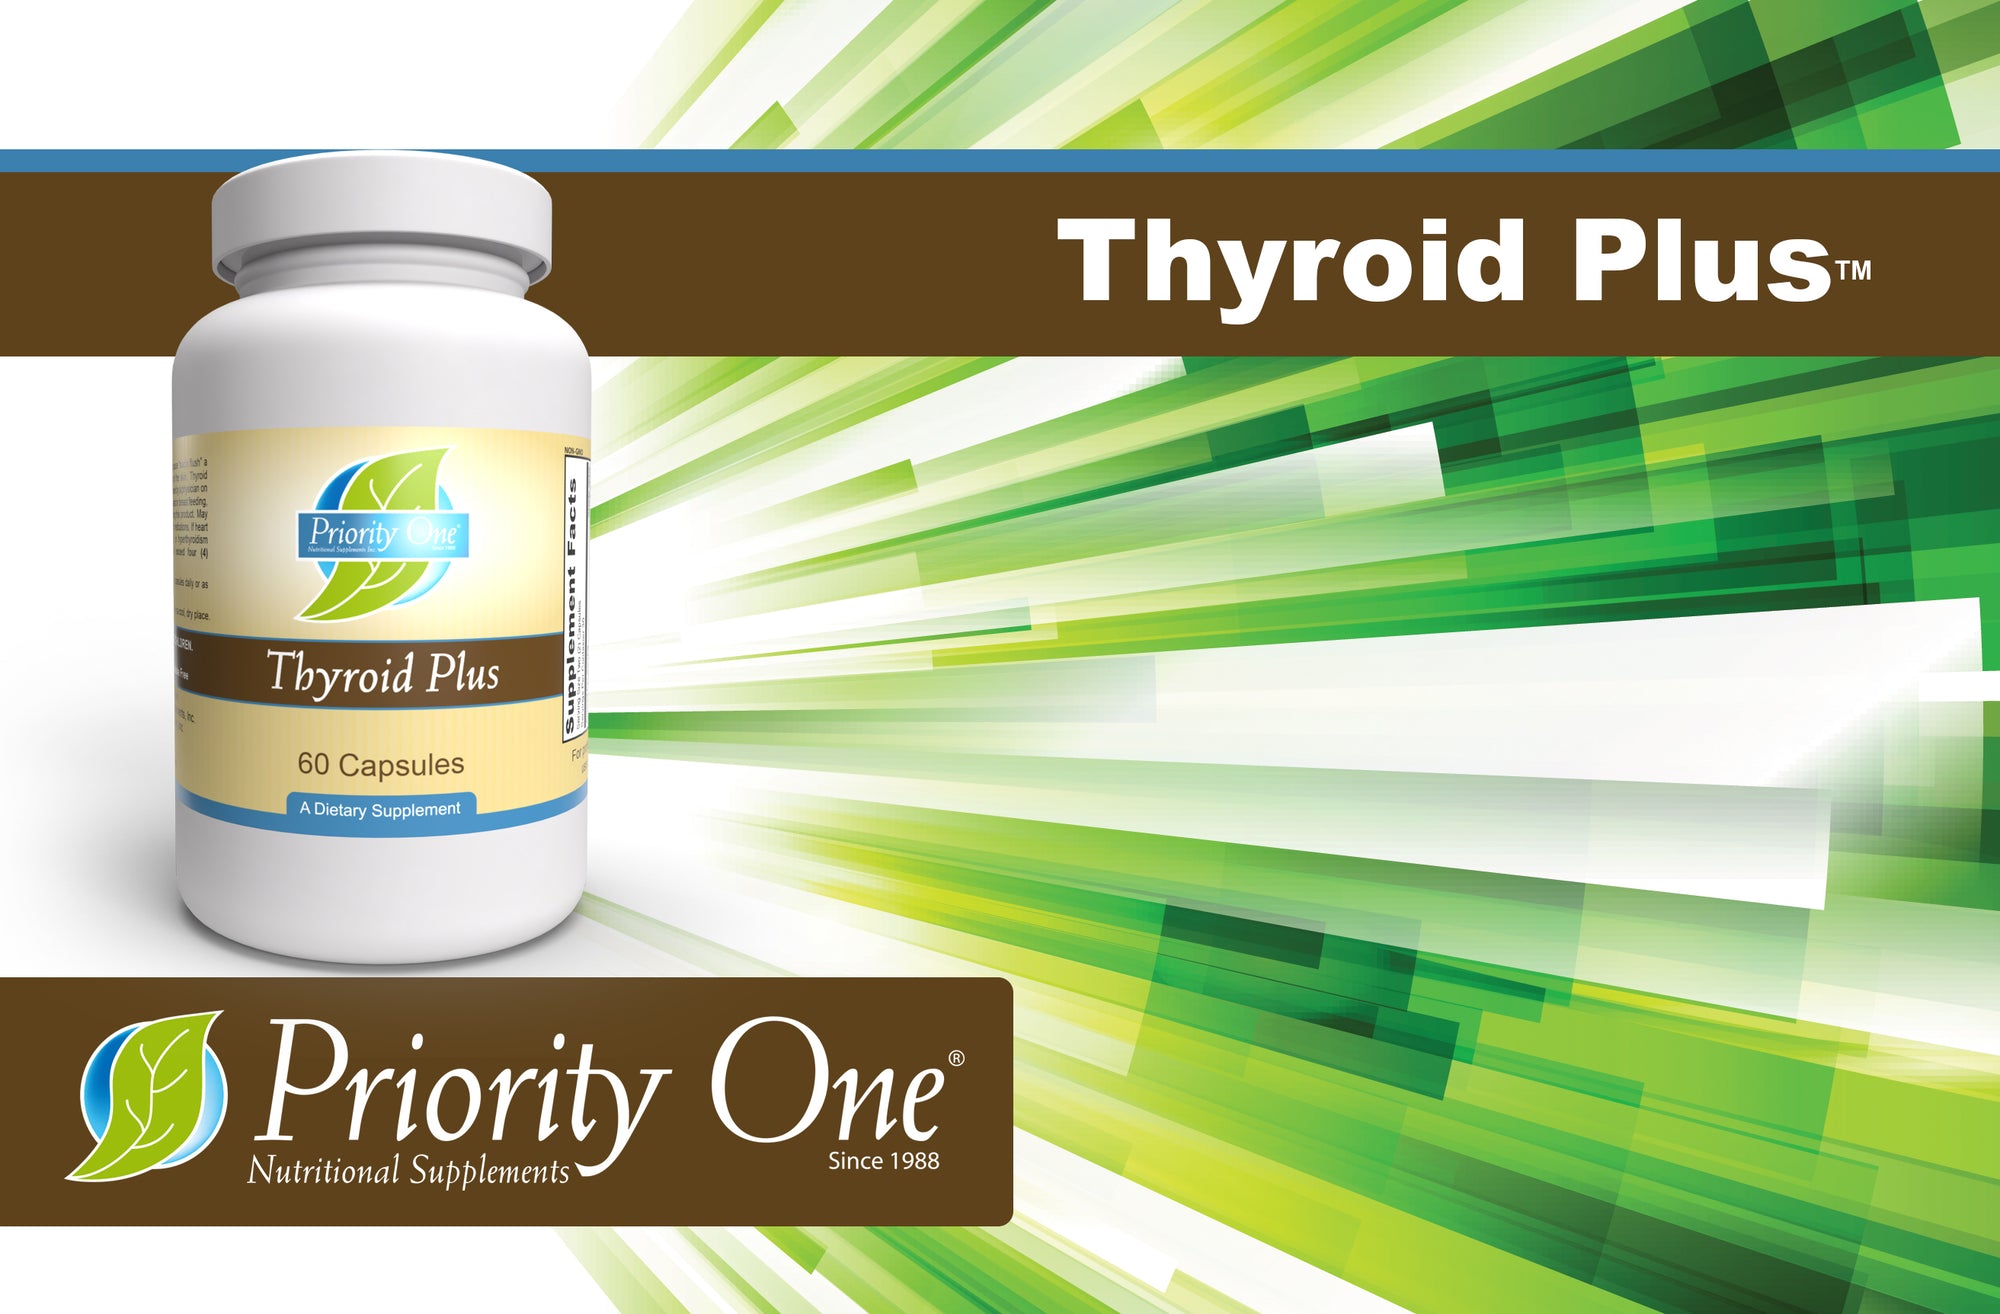 Thyroid Plus - Supplies essential nutrients to healthy thyroid function.*